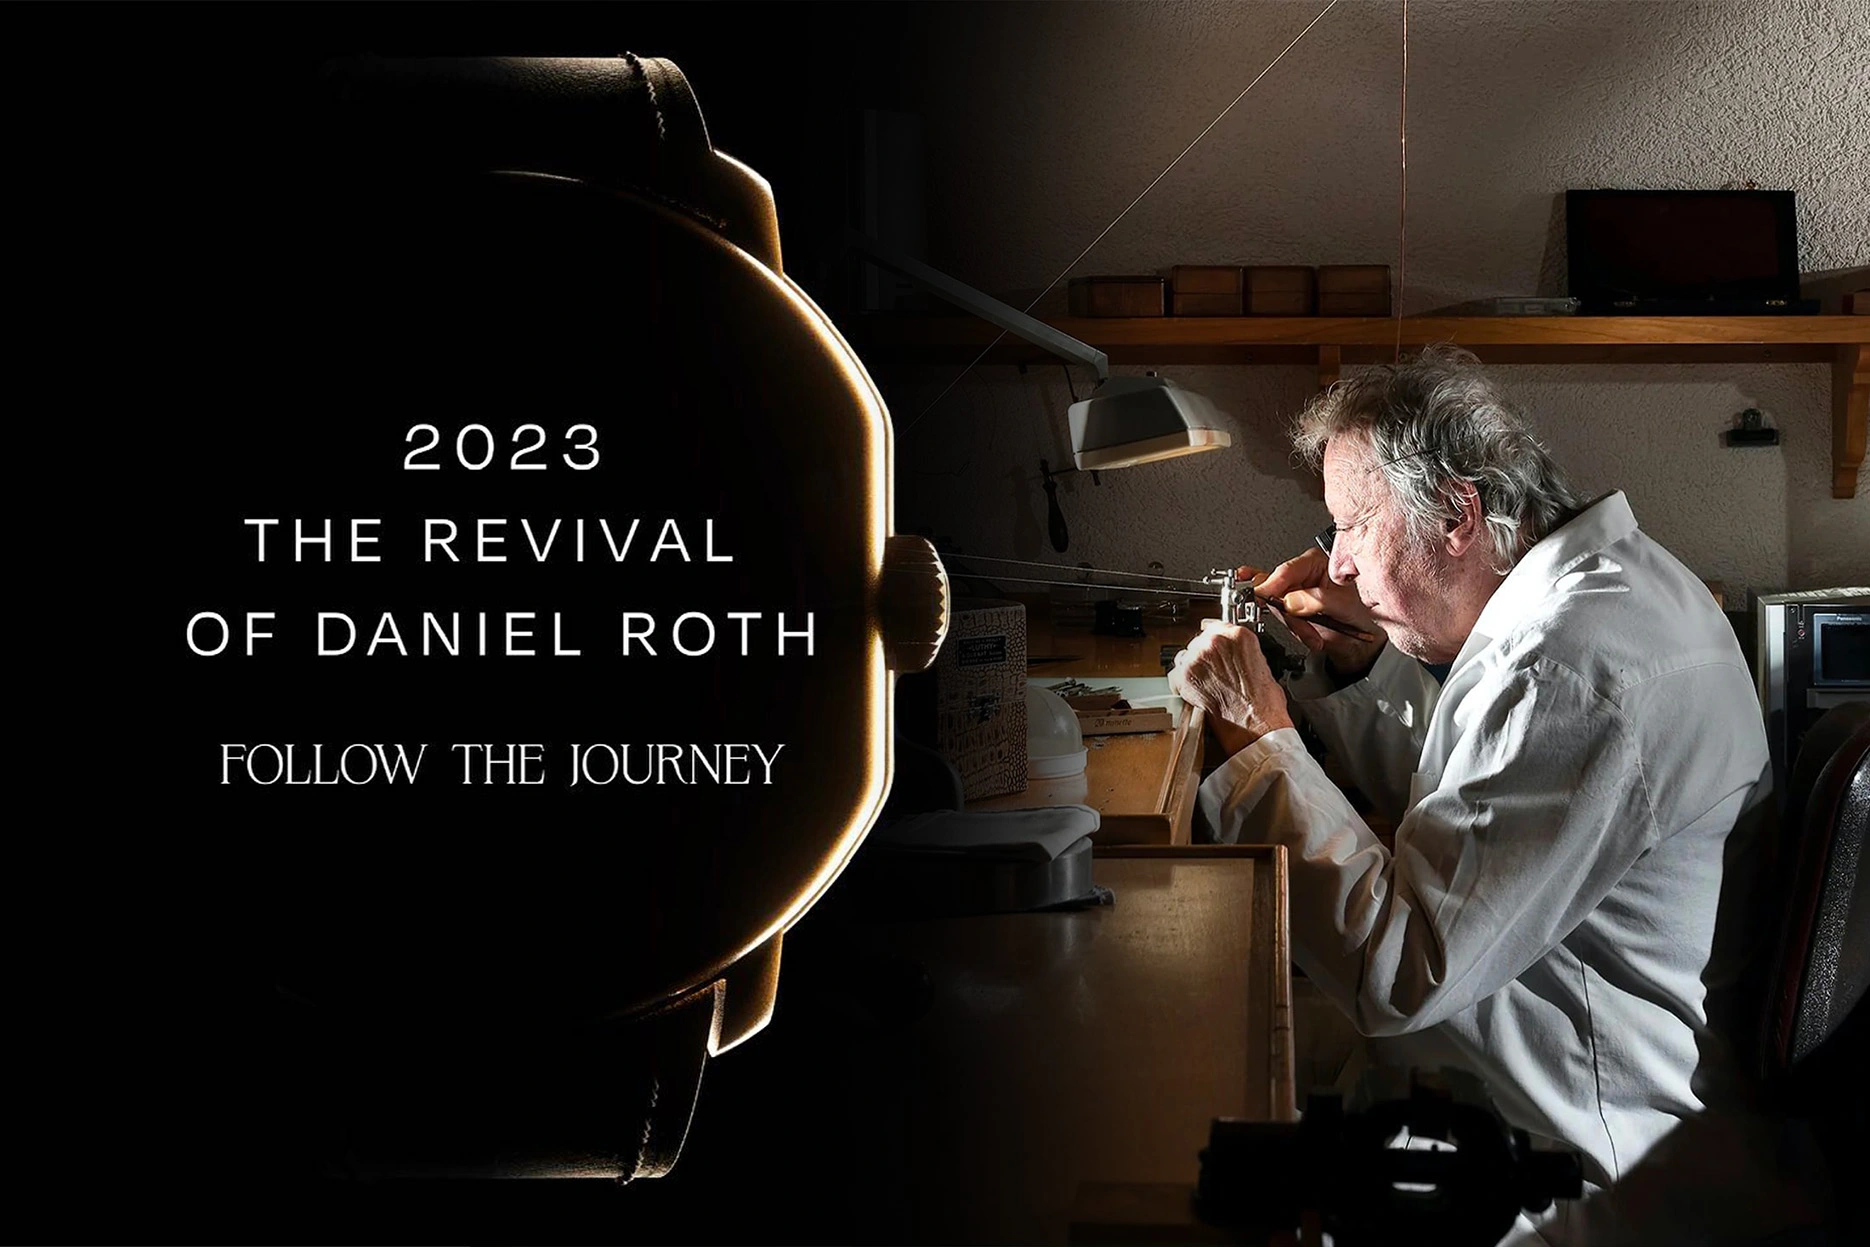 Daniel Roth Watch Brand To Return Under LVMH's La Fabrique du